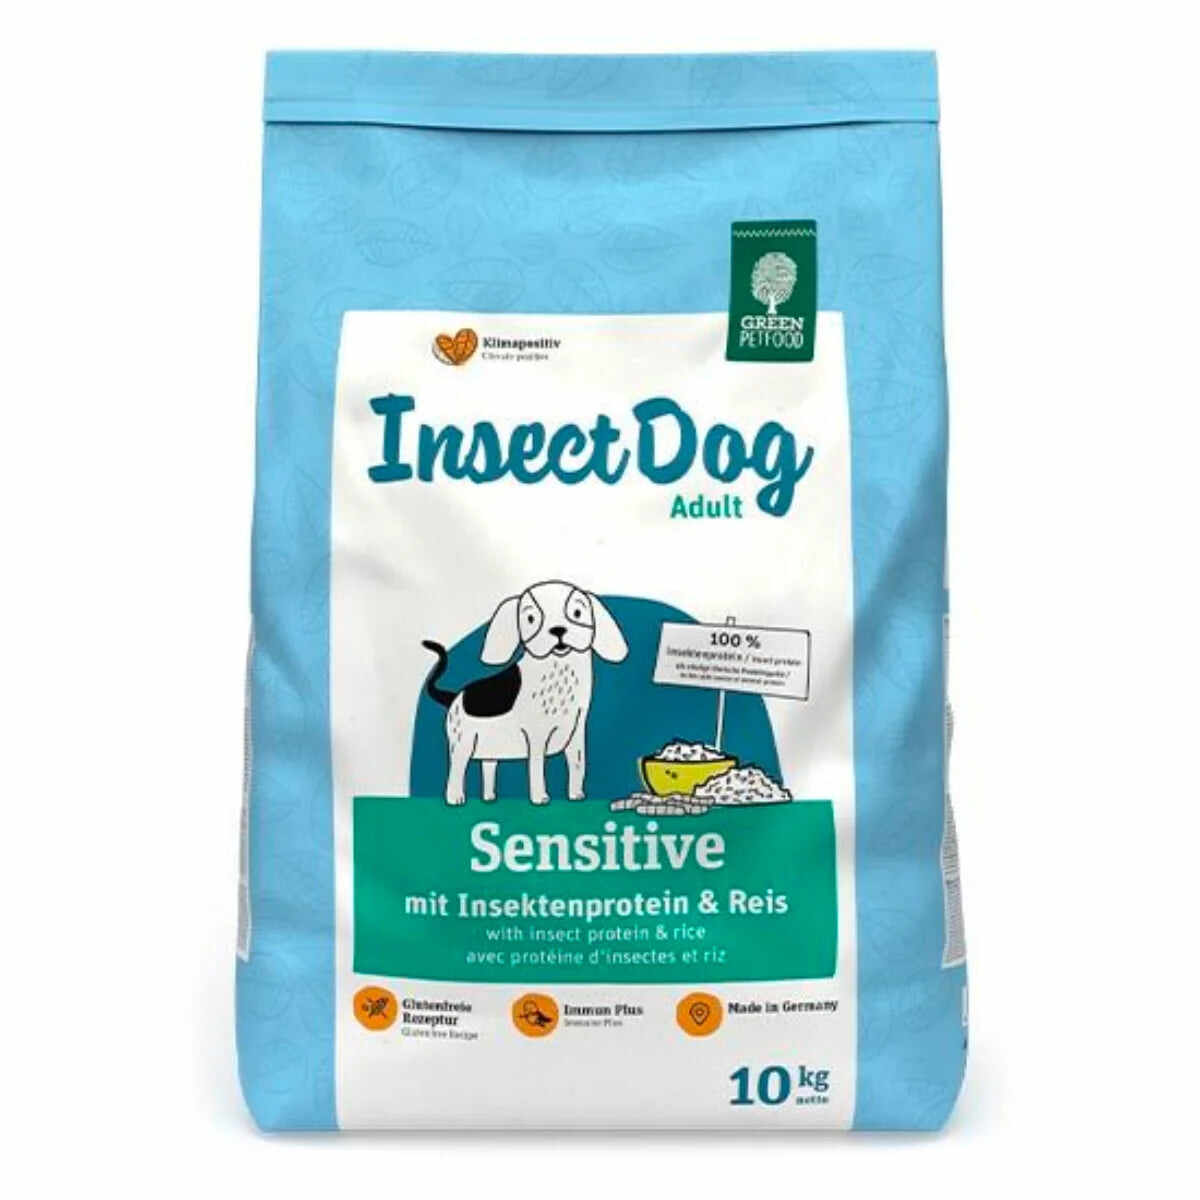 InsectDog Sensitive Dry Food